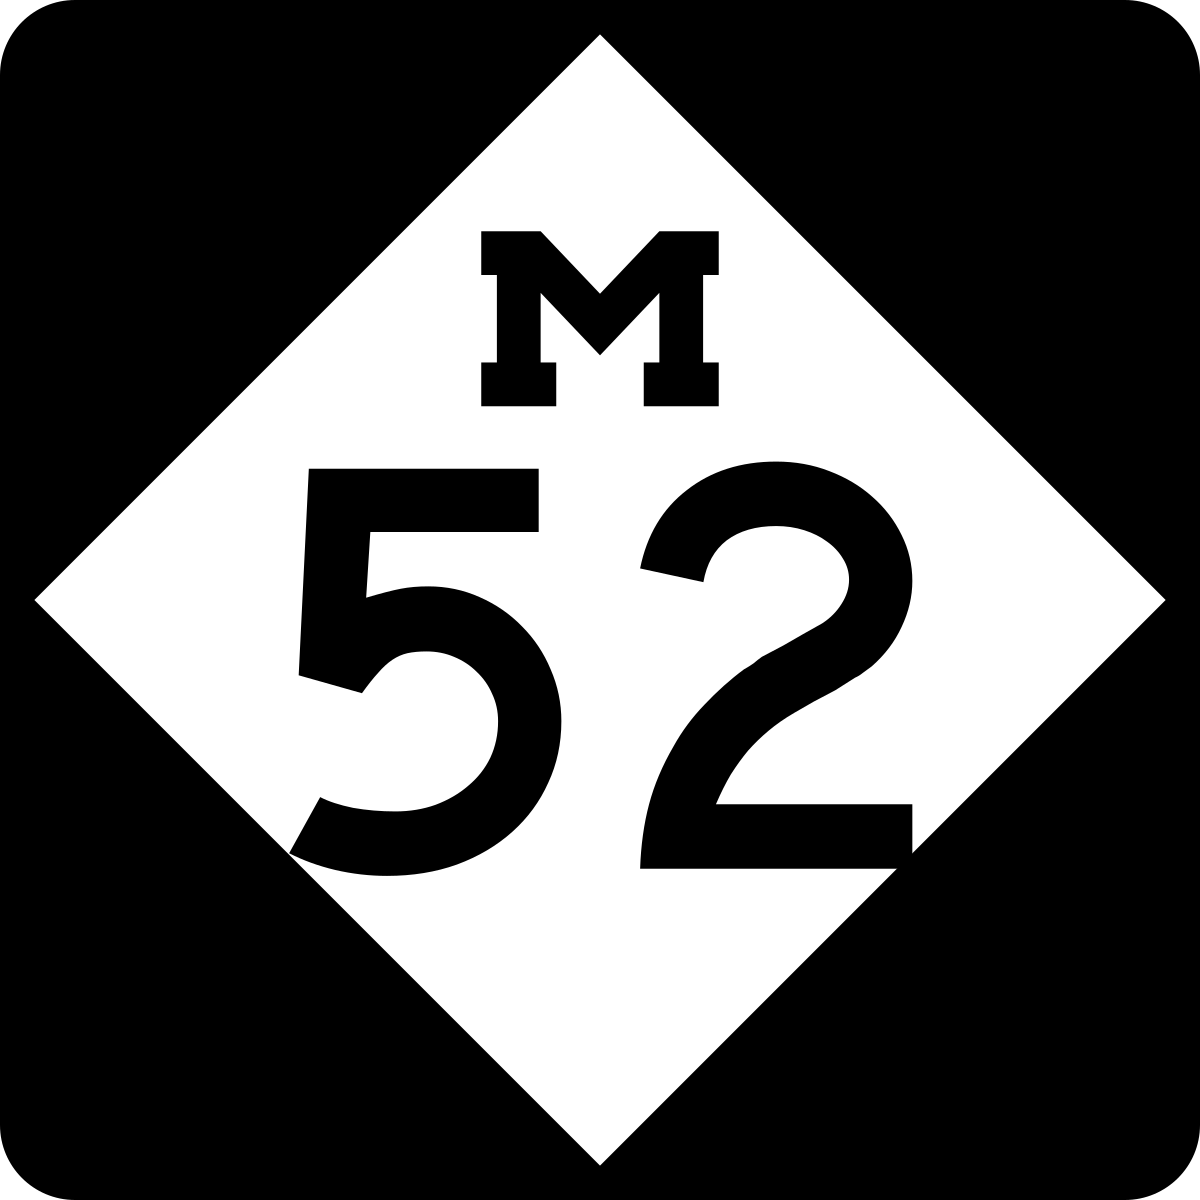 M-52 (Michigan highway) - Wikipedia